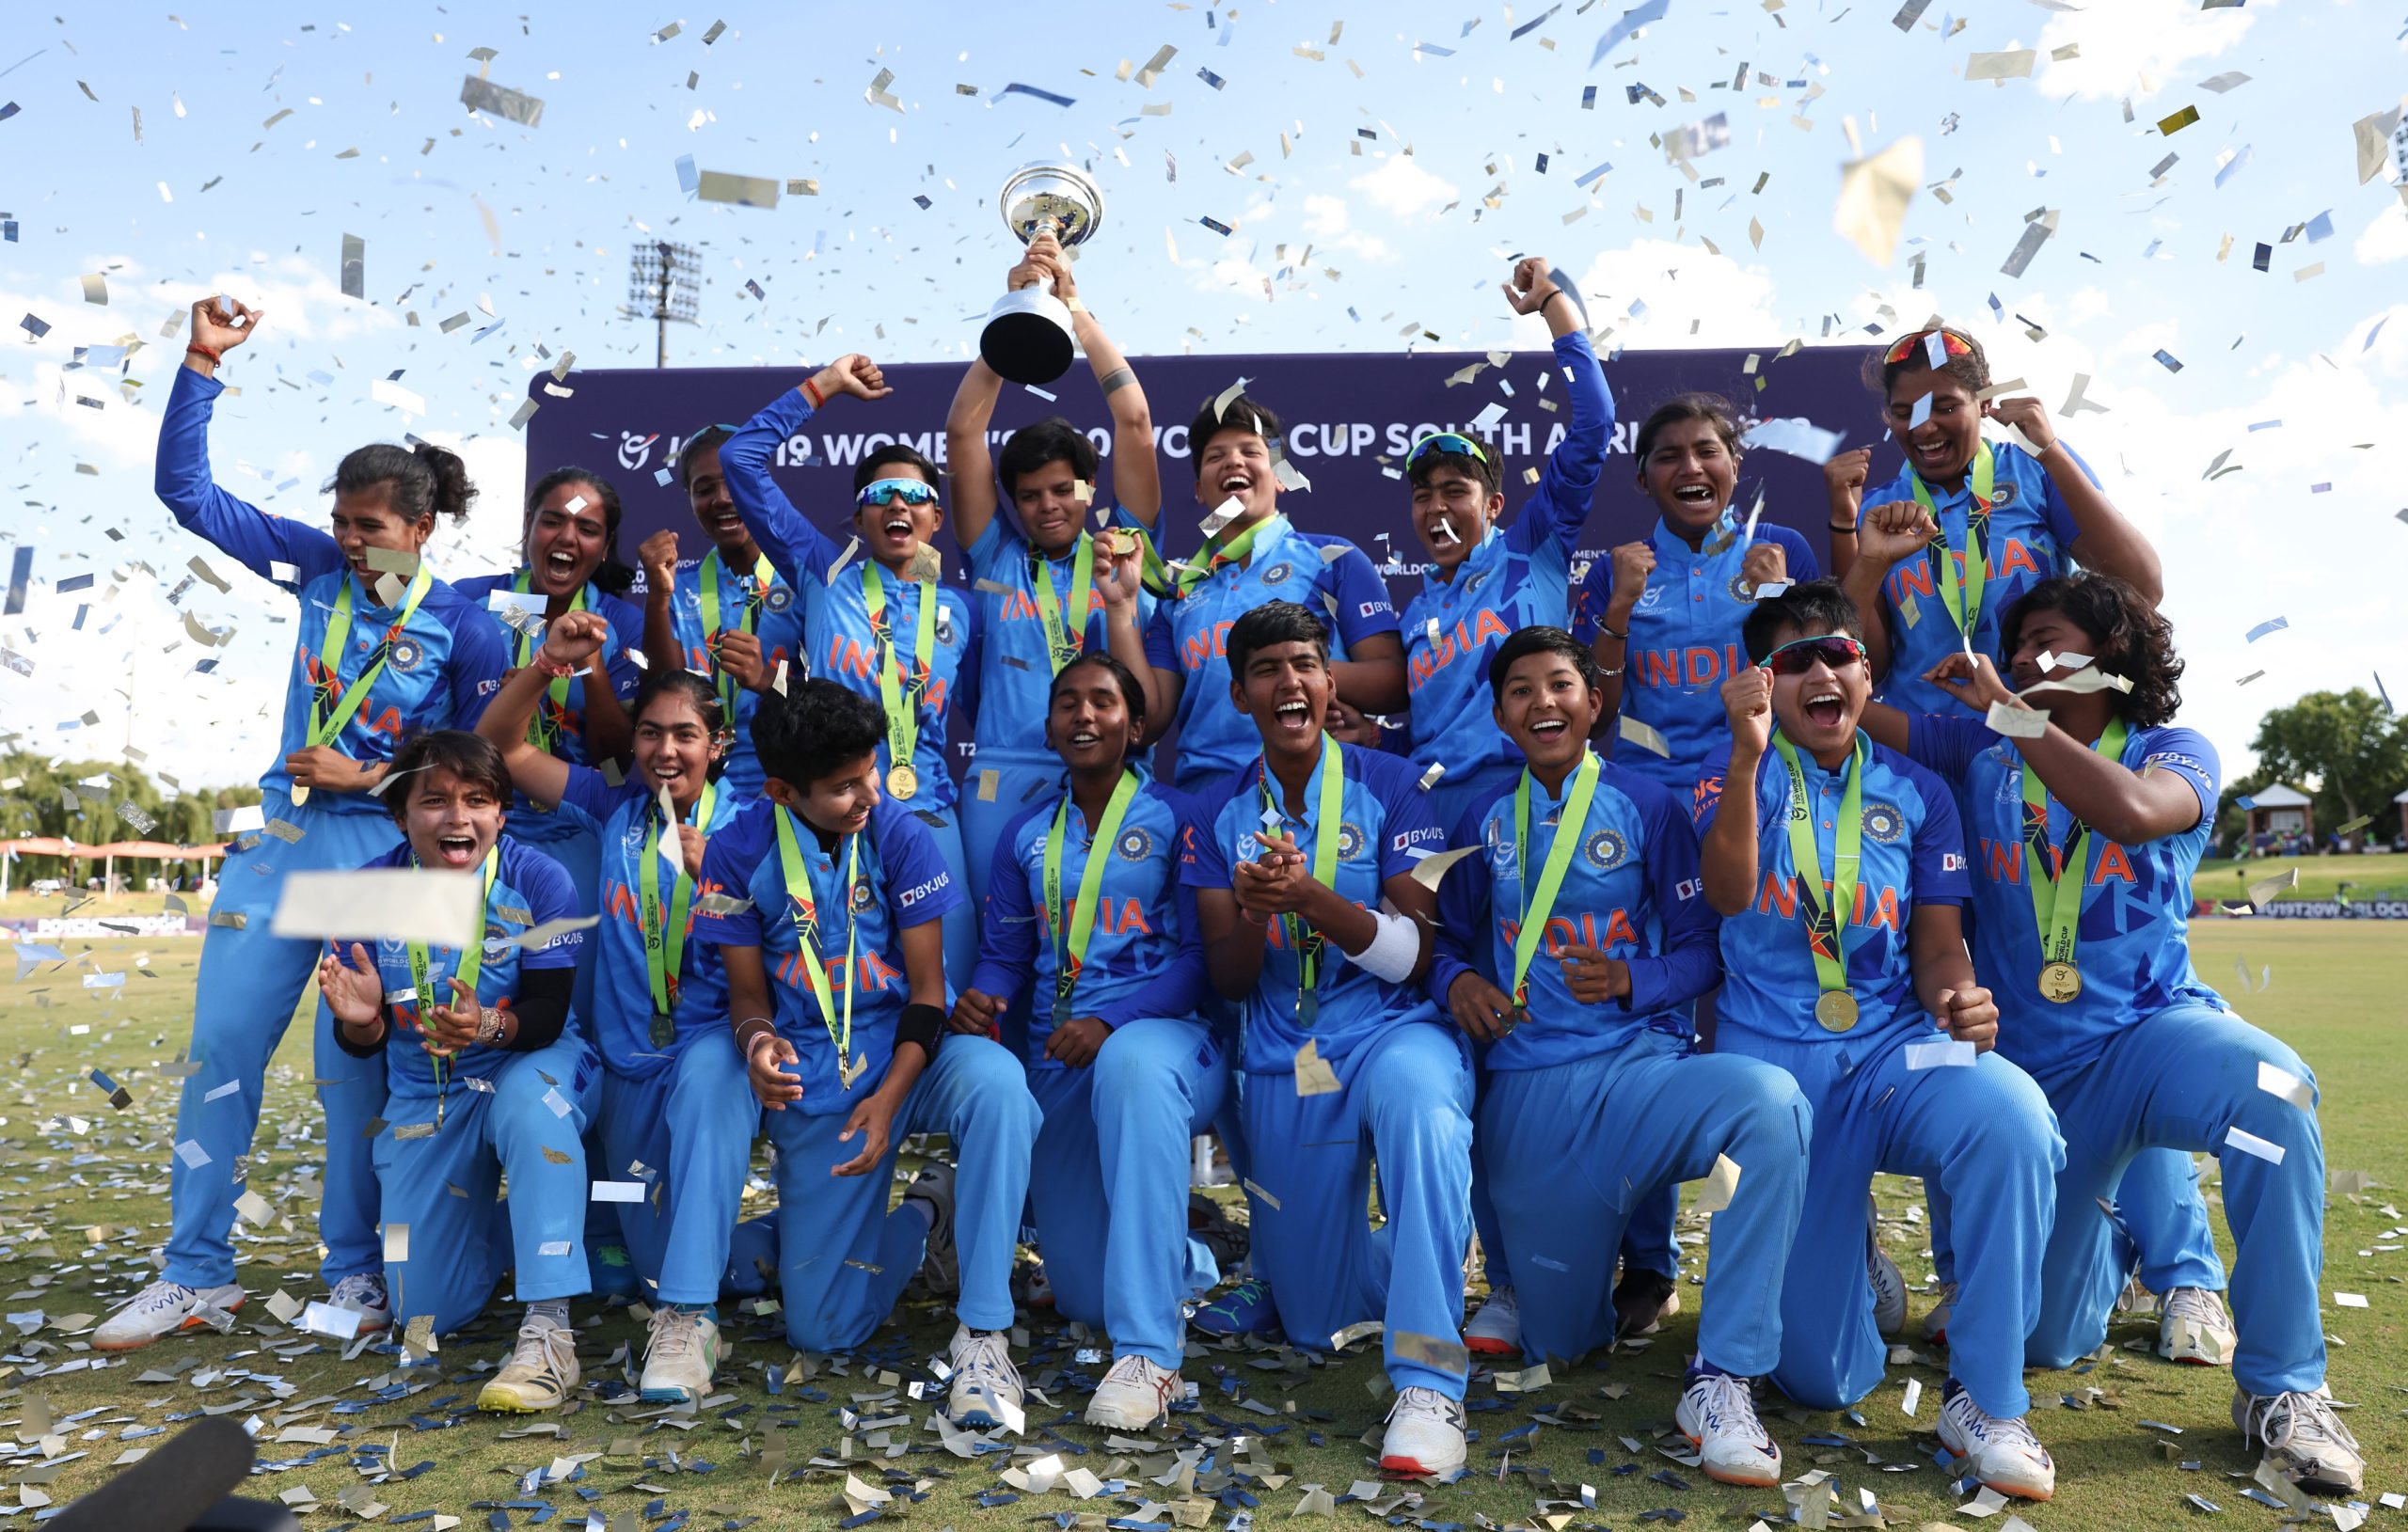 Champions, U19 Team India, Women's cricket team 19